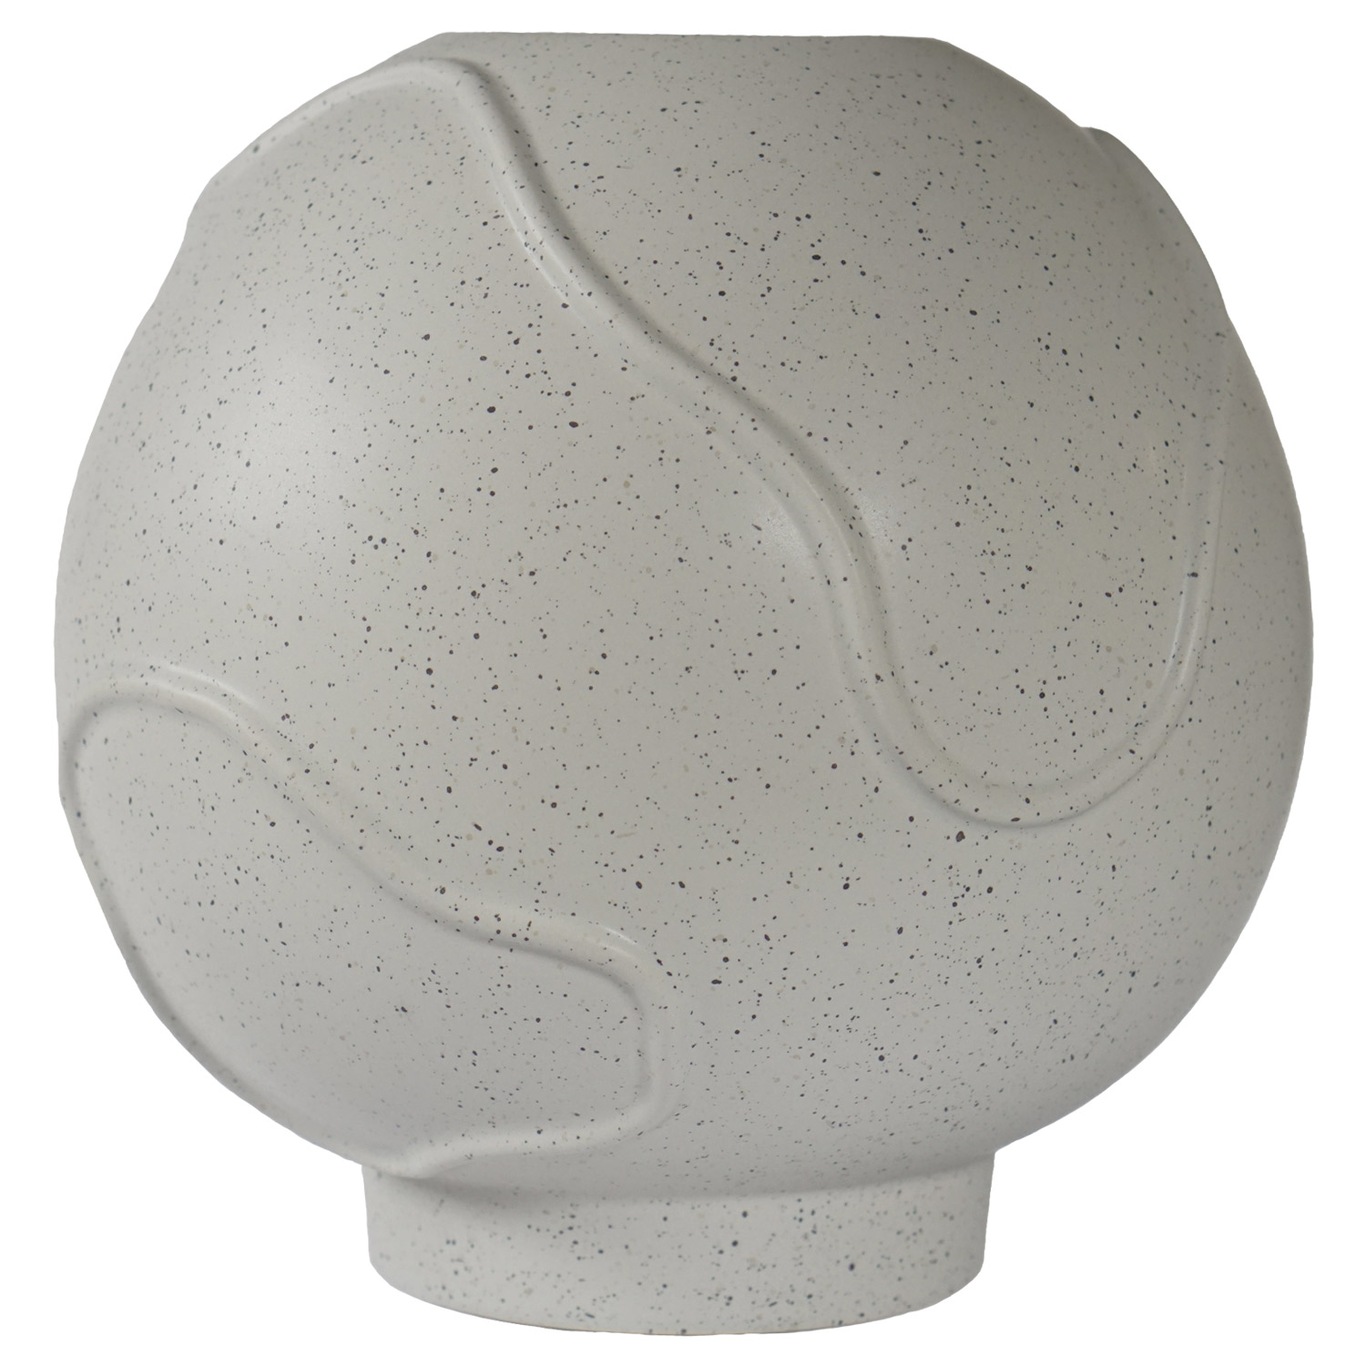 Form Vas Large, Mole Dot